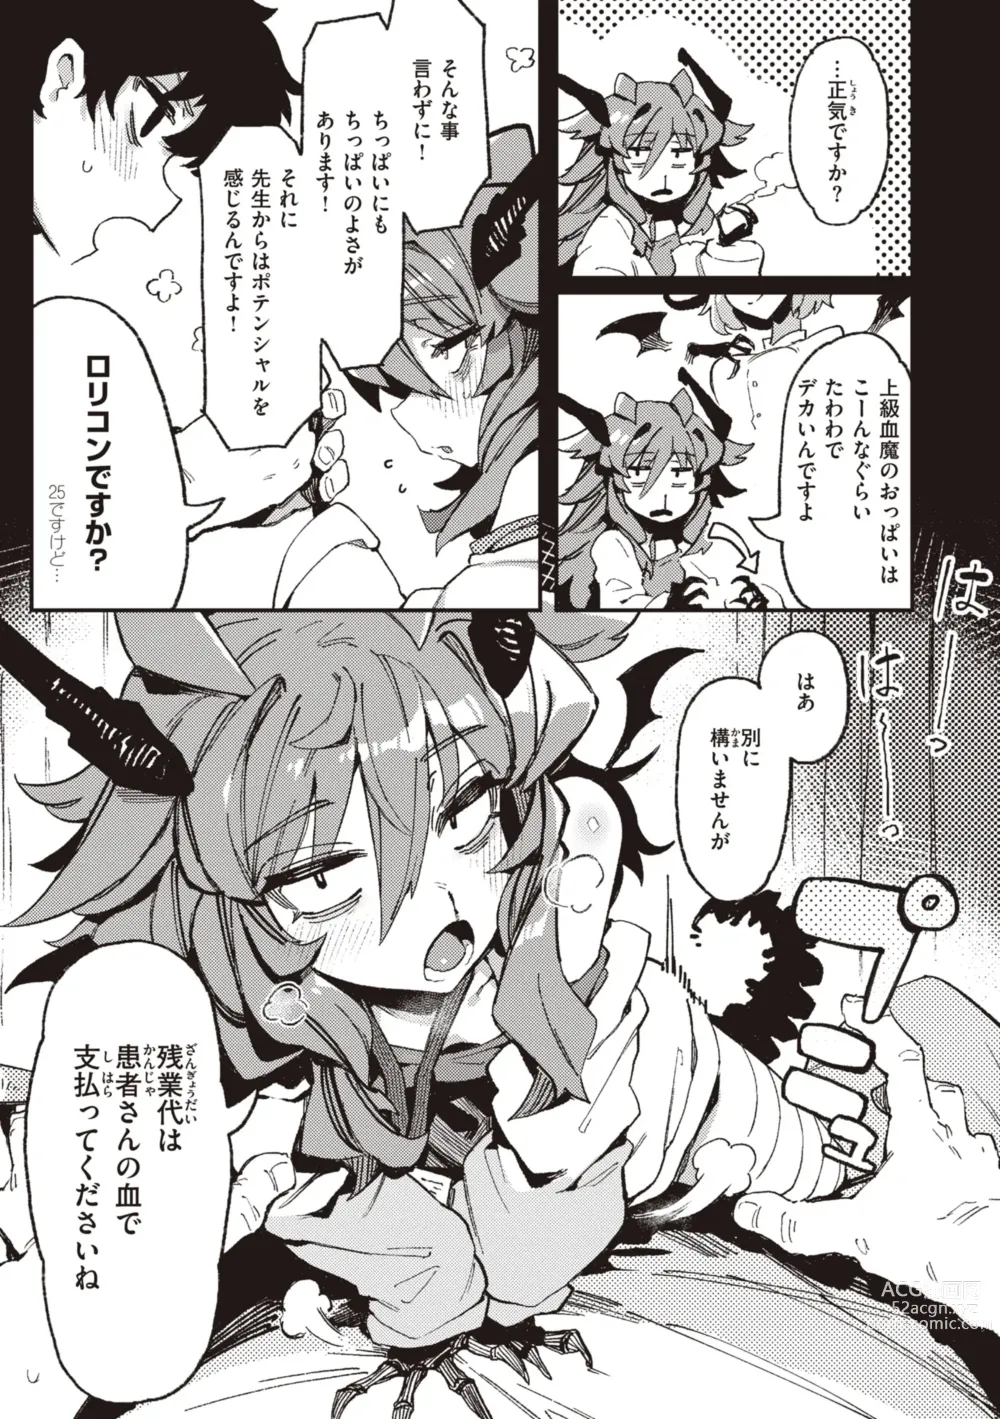 Page 7 of manga Ino Megami-tachi - interspecies venus